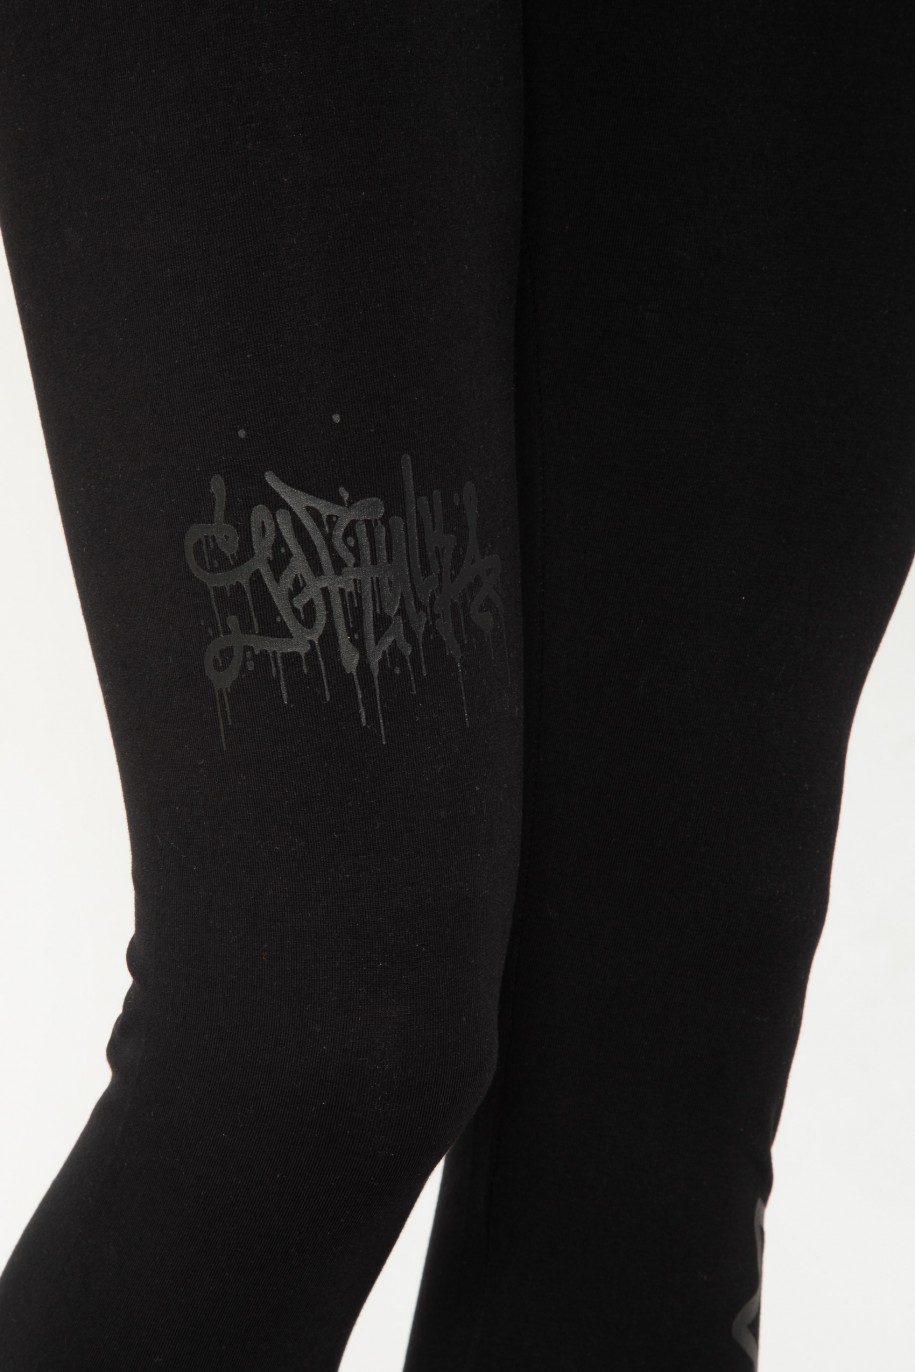 Czarne legginsy z nadrukiem graffiti - 43369